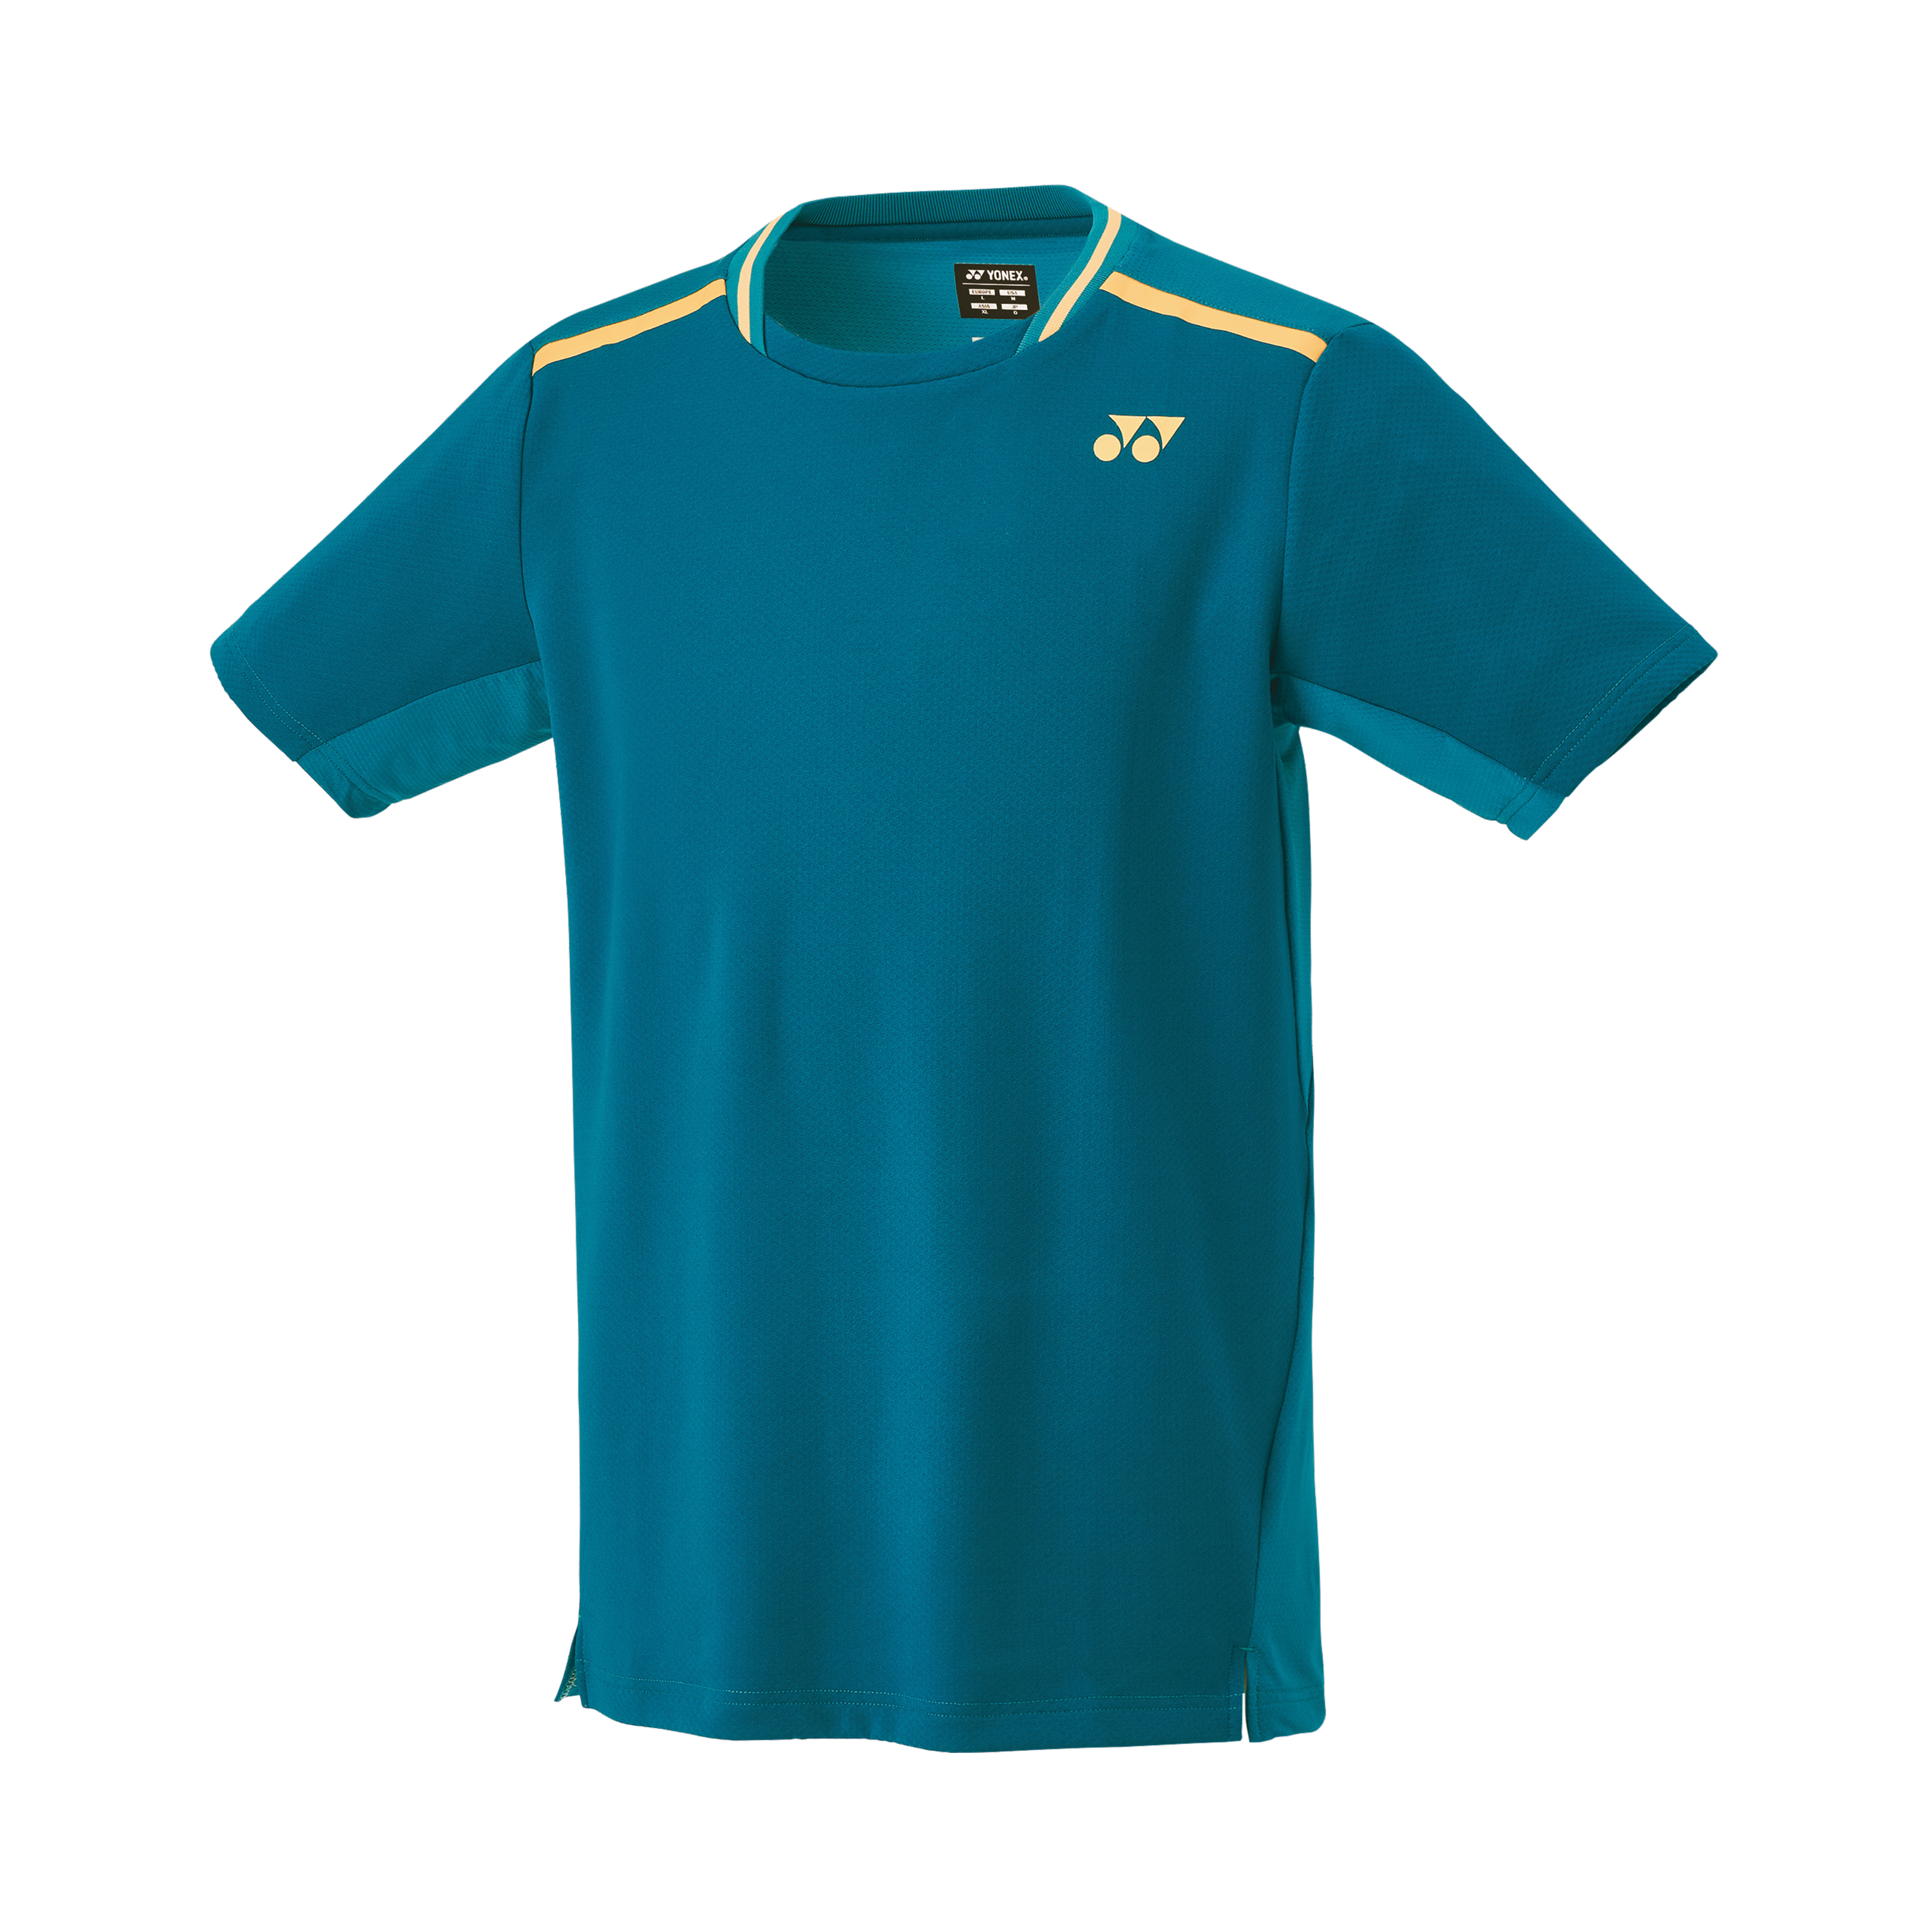 Yonex Premium Badminton/ Tennis Shirt 10559 Blue/ Green MEN'S